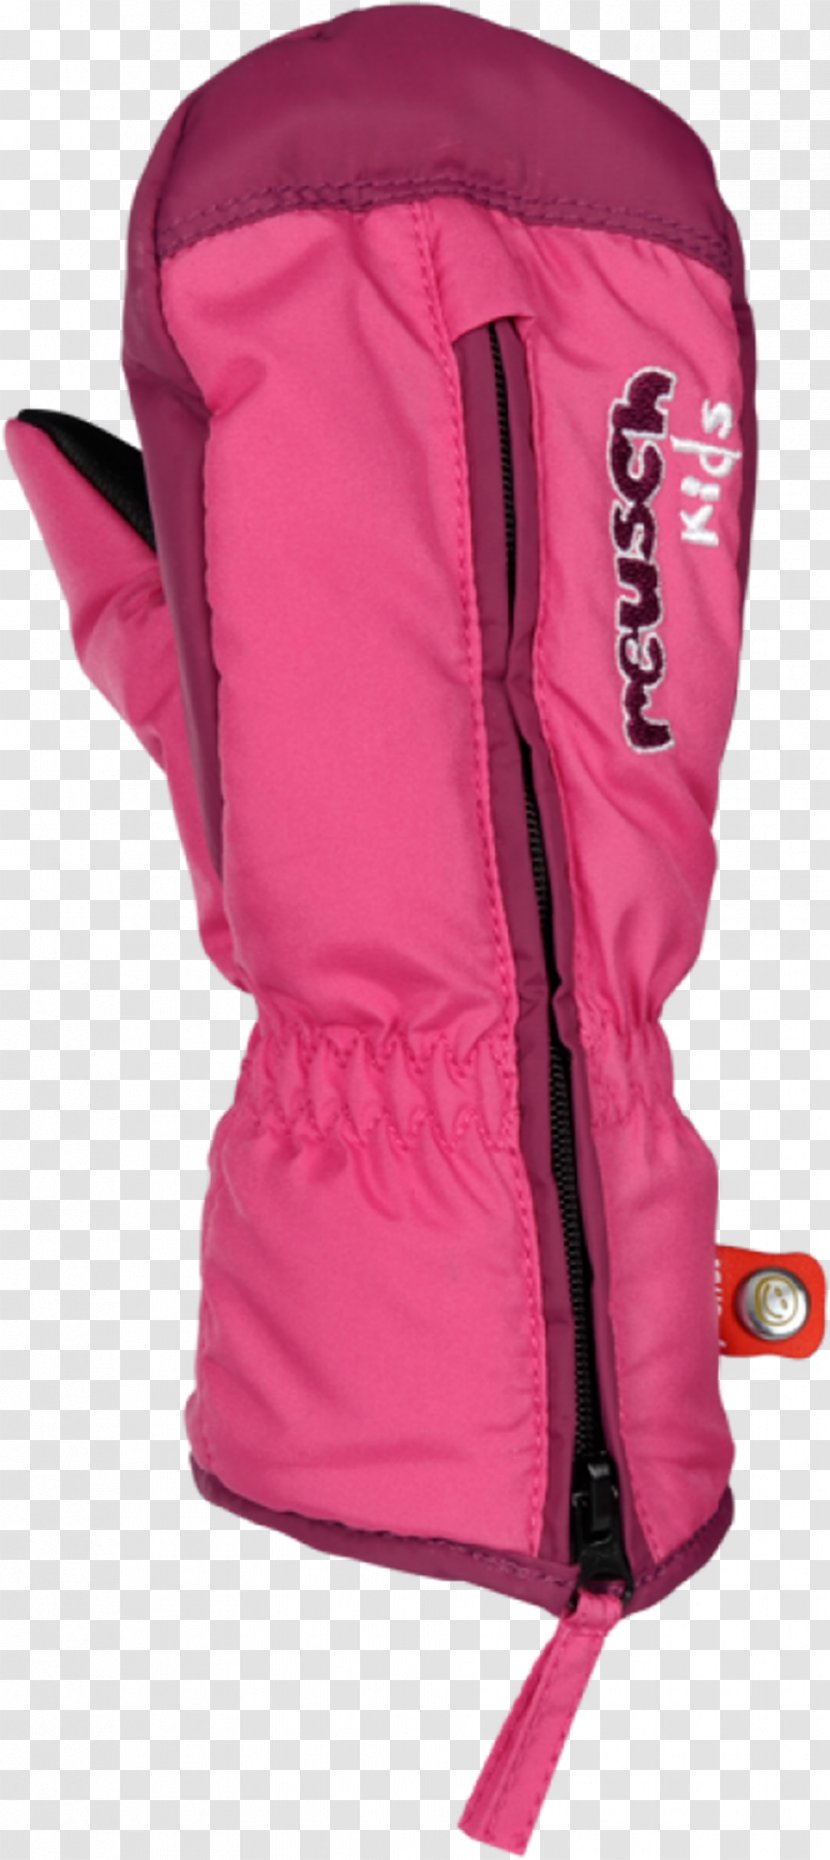 Reusch International Skiing Sports Glove Jacket - Salomon Group - Click Free Shipping Transparent PNG